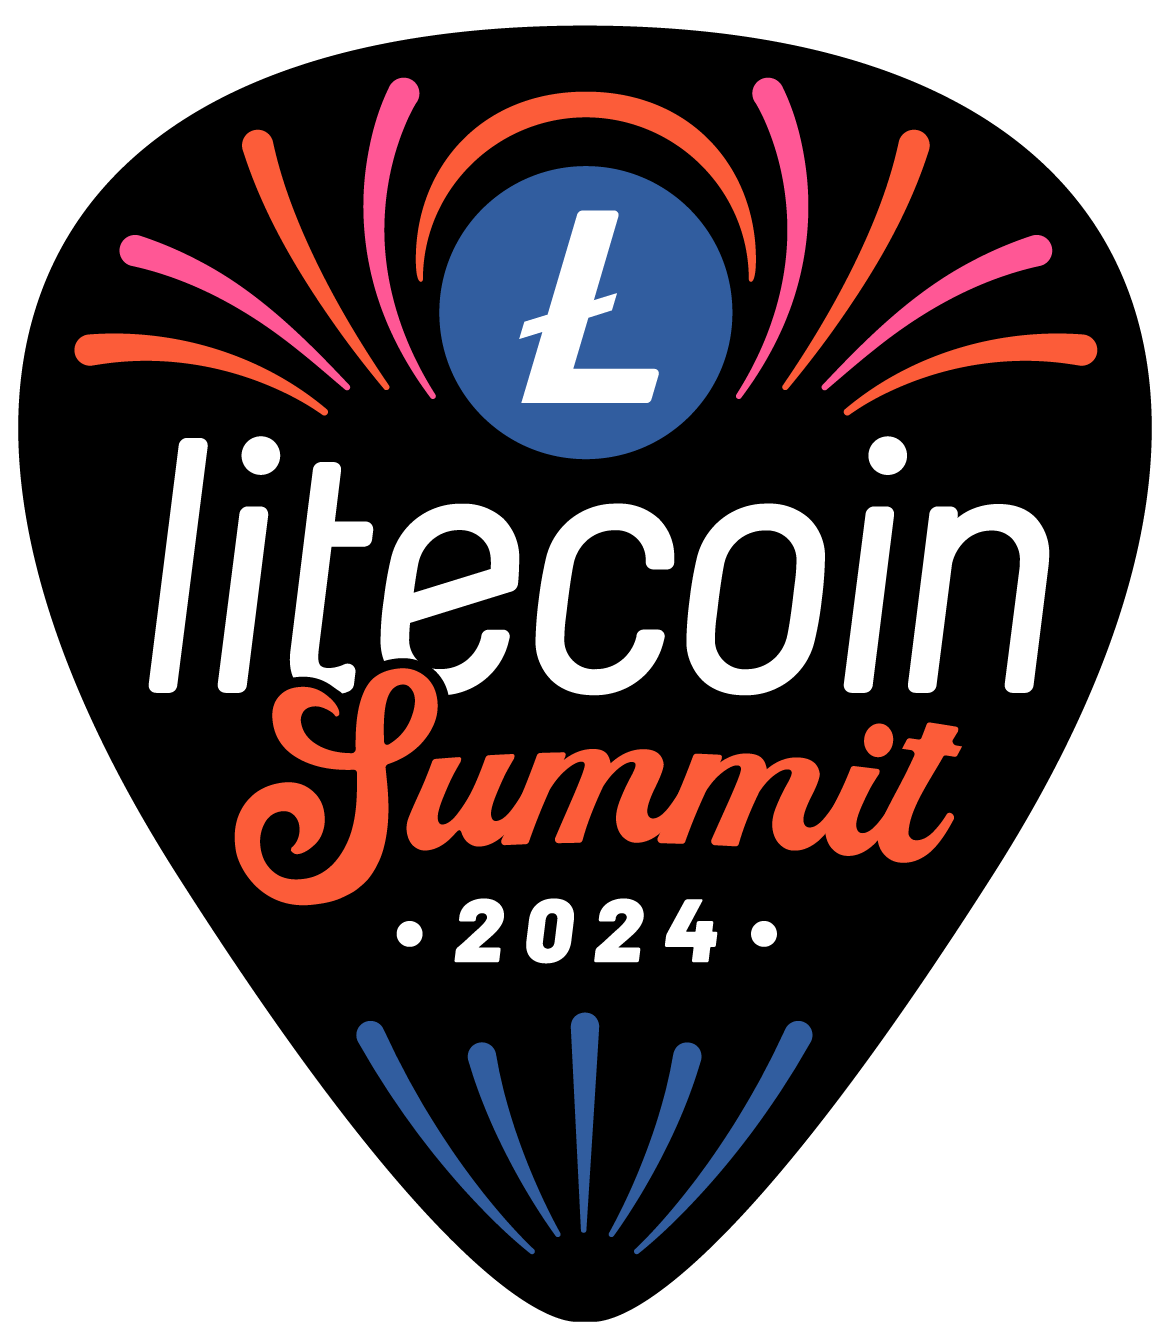 Litecoin Summit 2024 - Digital Sponsorship Package